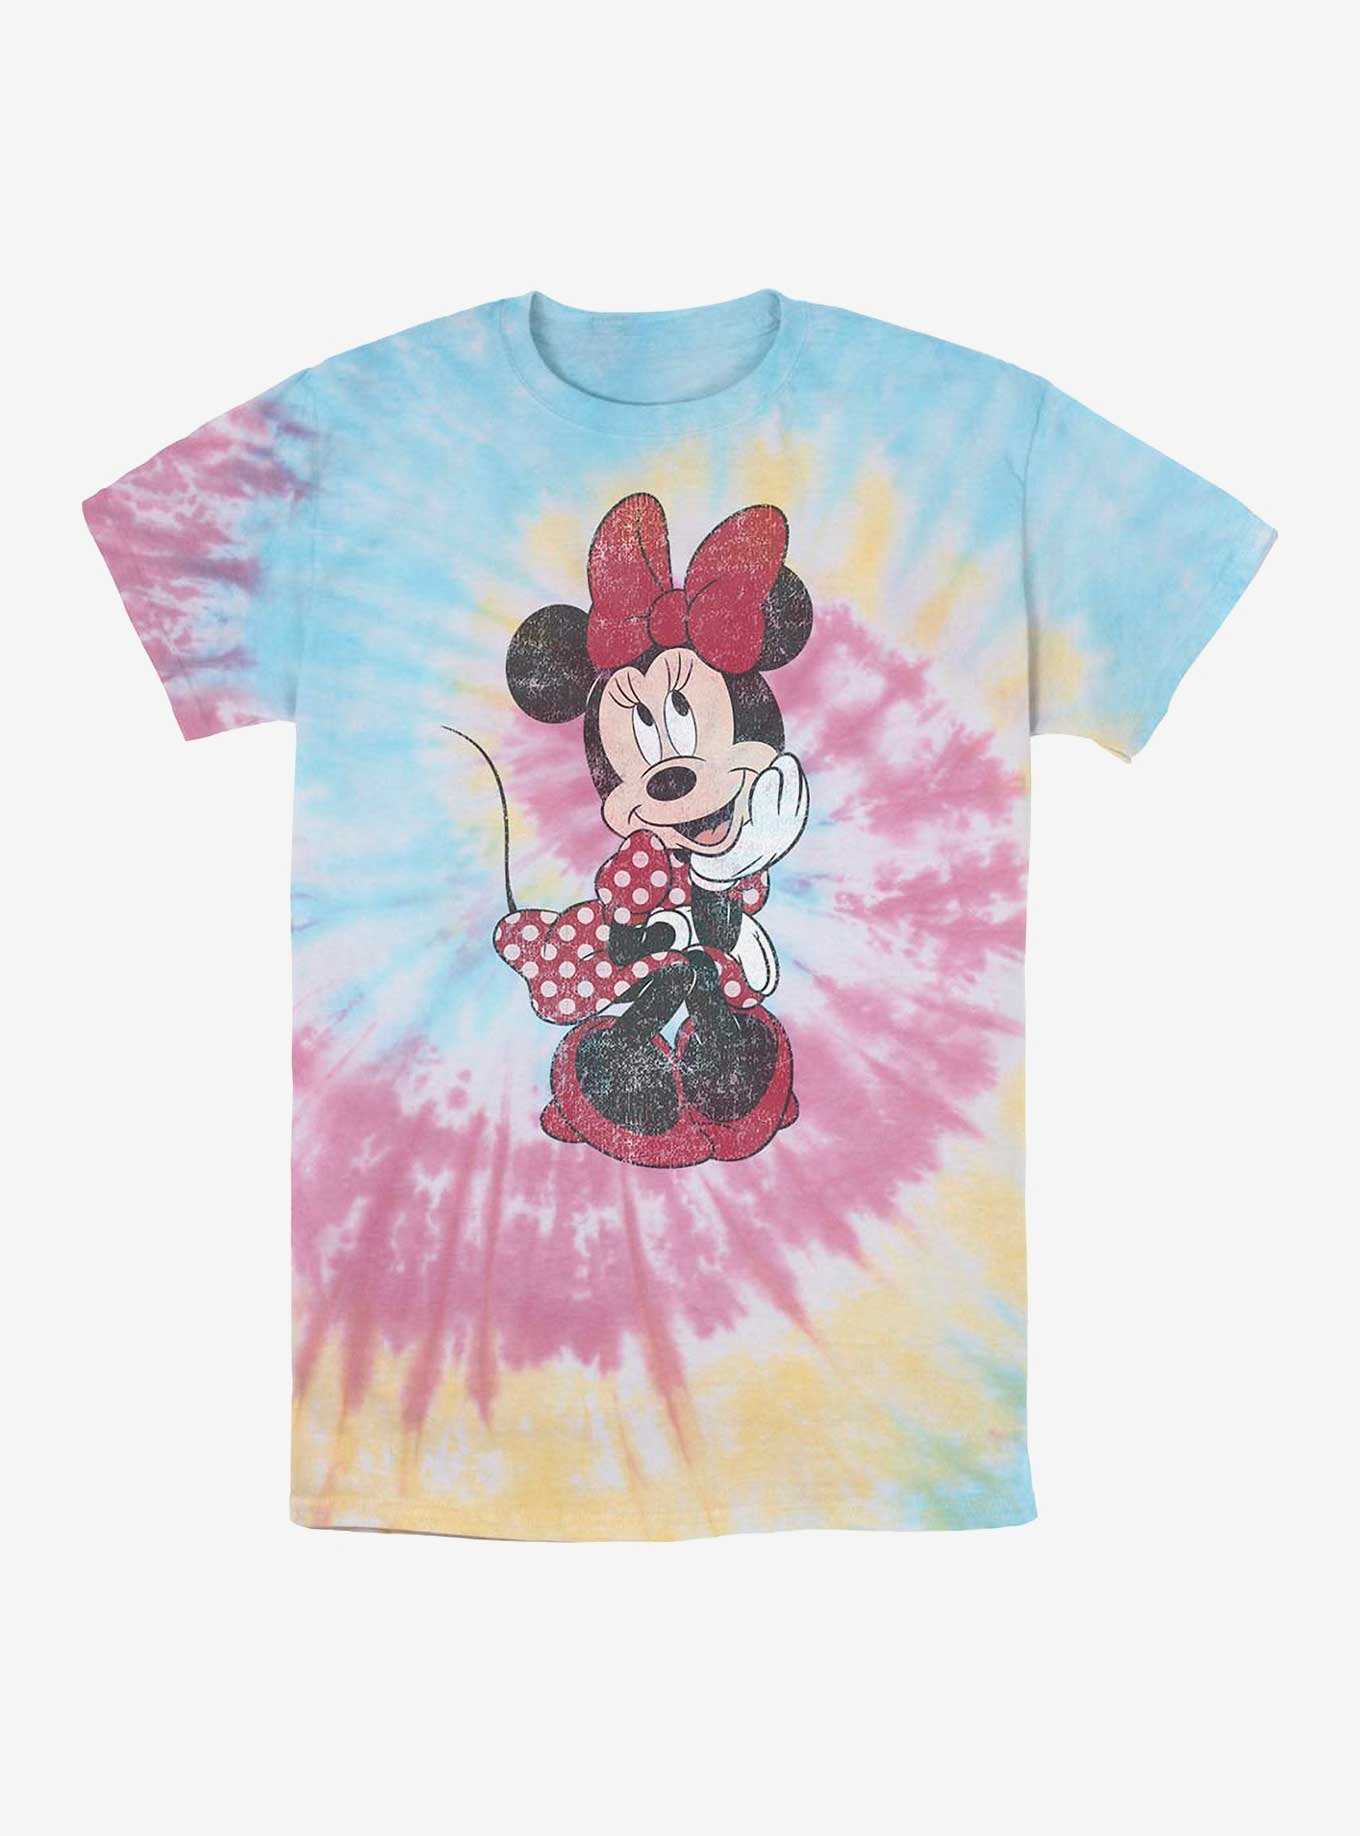 Disney Minnie Mouse Polka Dot Minnie Tie-Dye T-Shirt, , hi-res